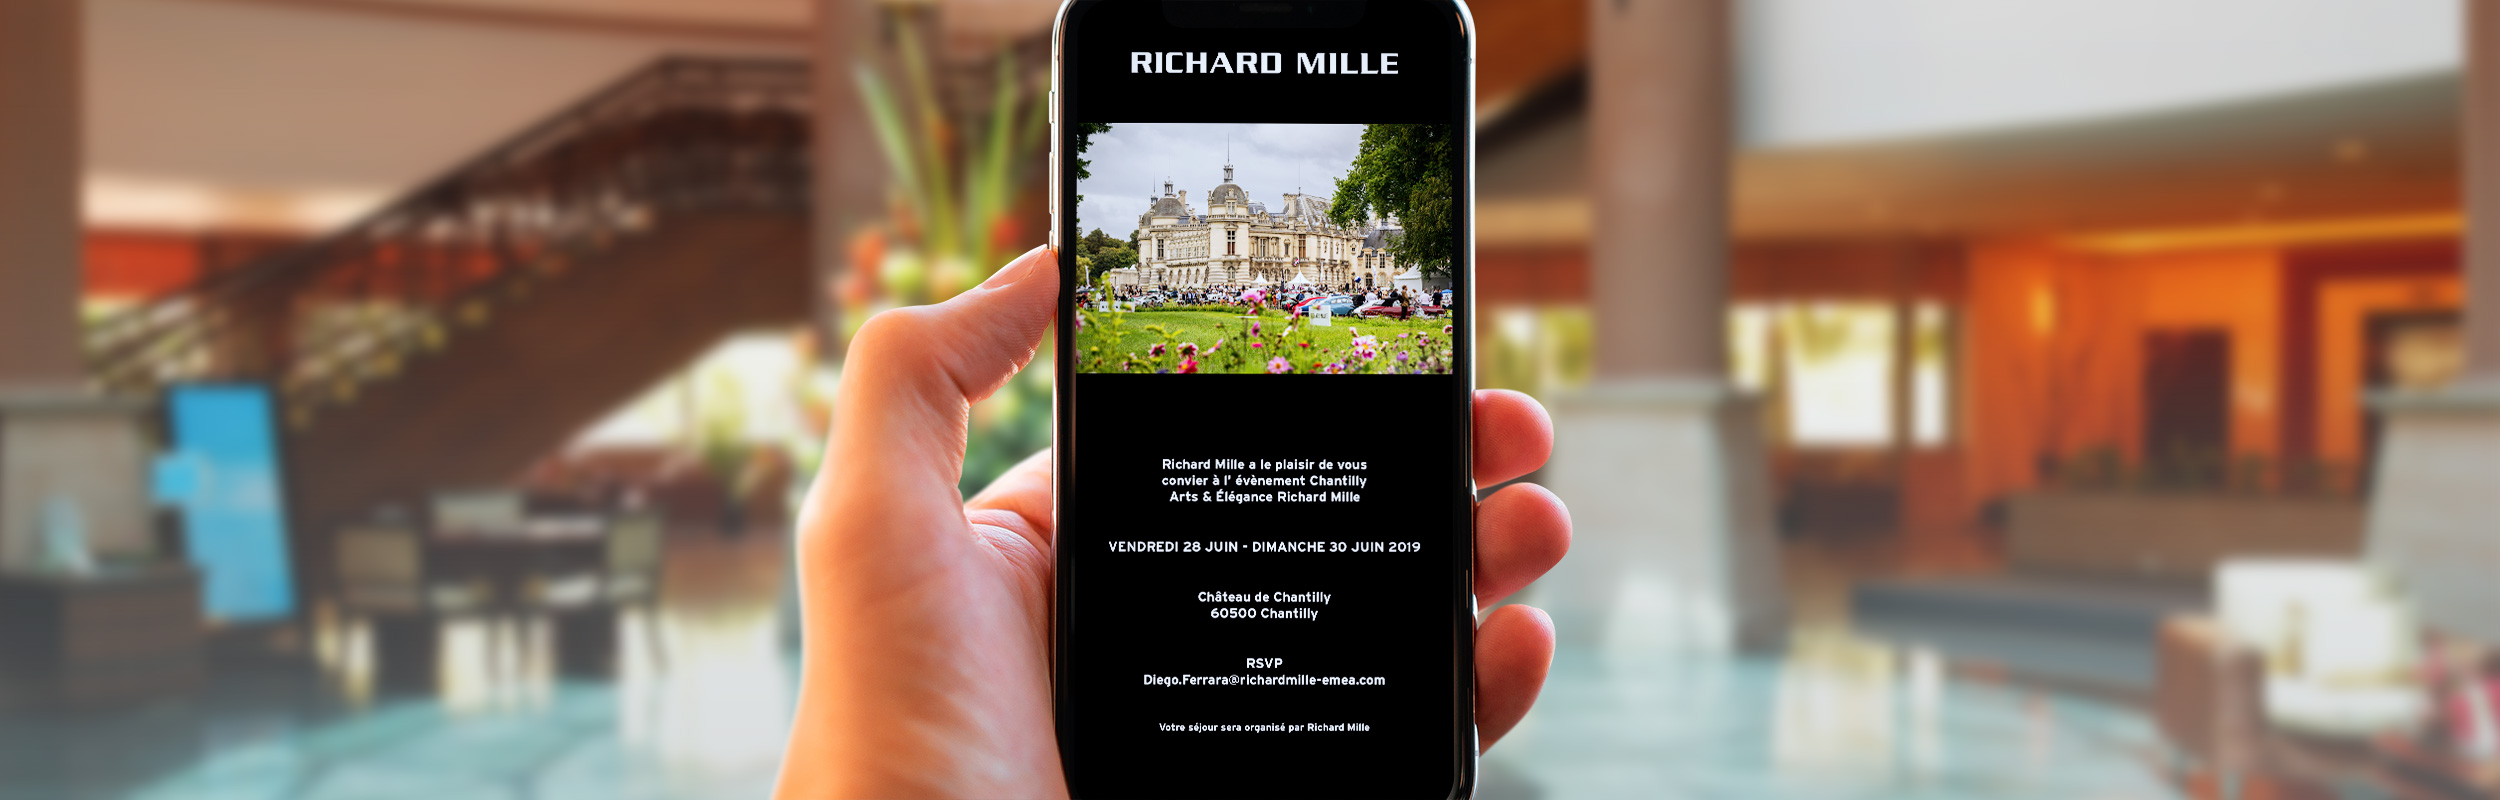 Richard Mille mobile invite